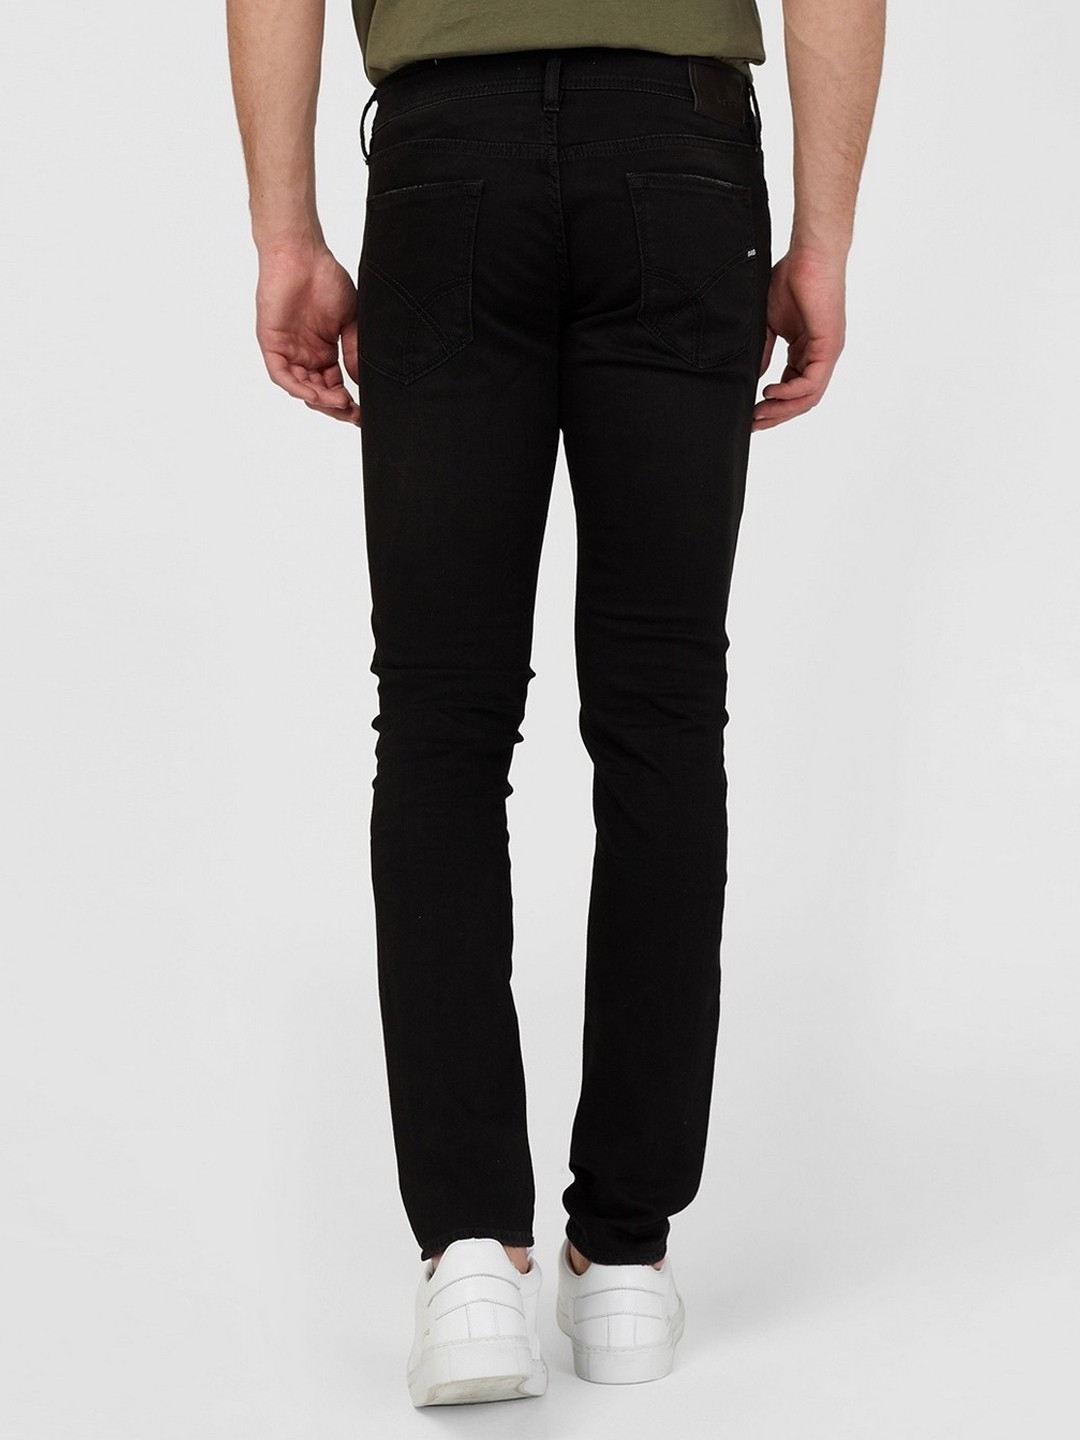 Men's Sax Zip Skinny Fit Black Jeans